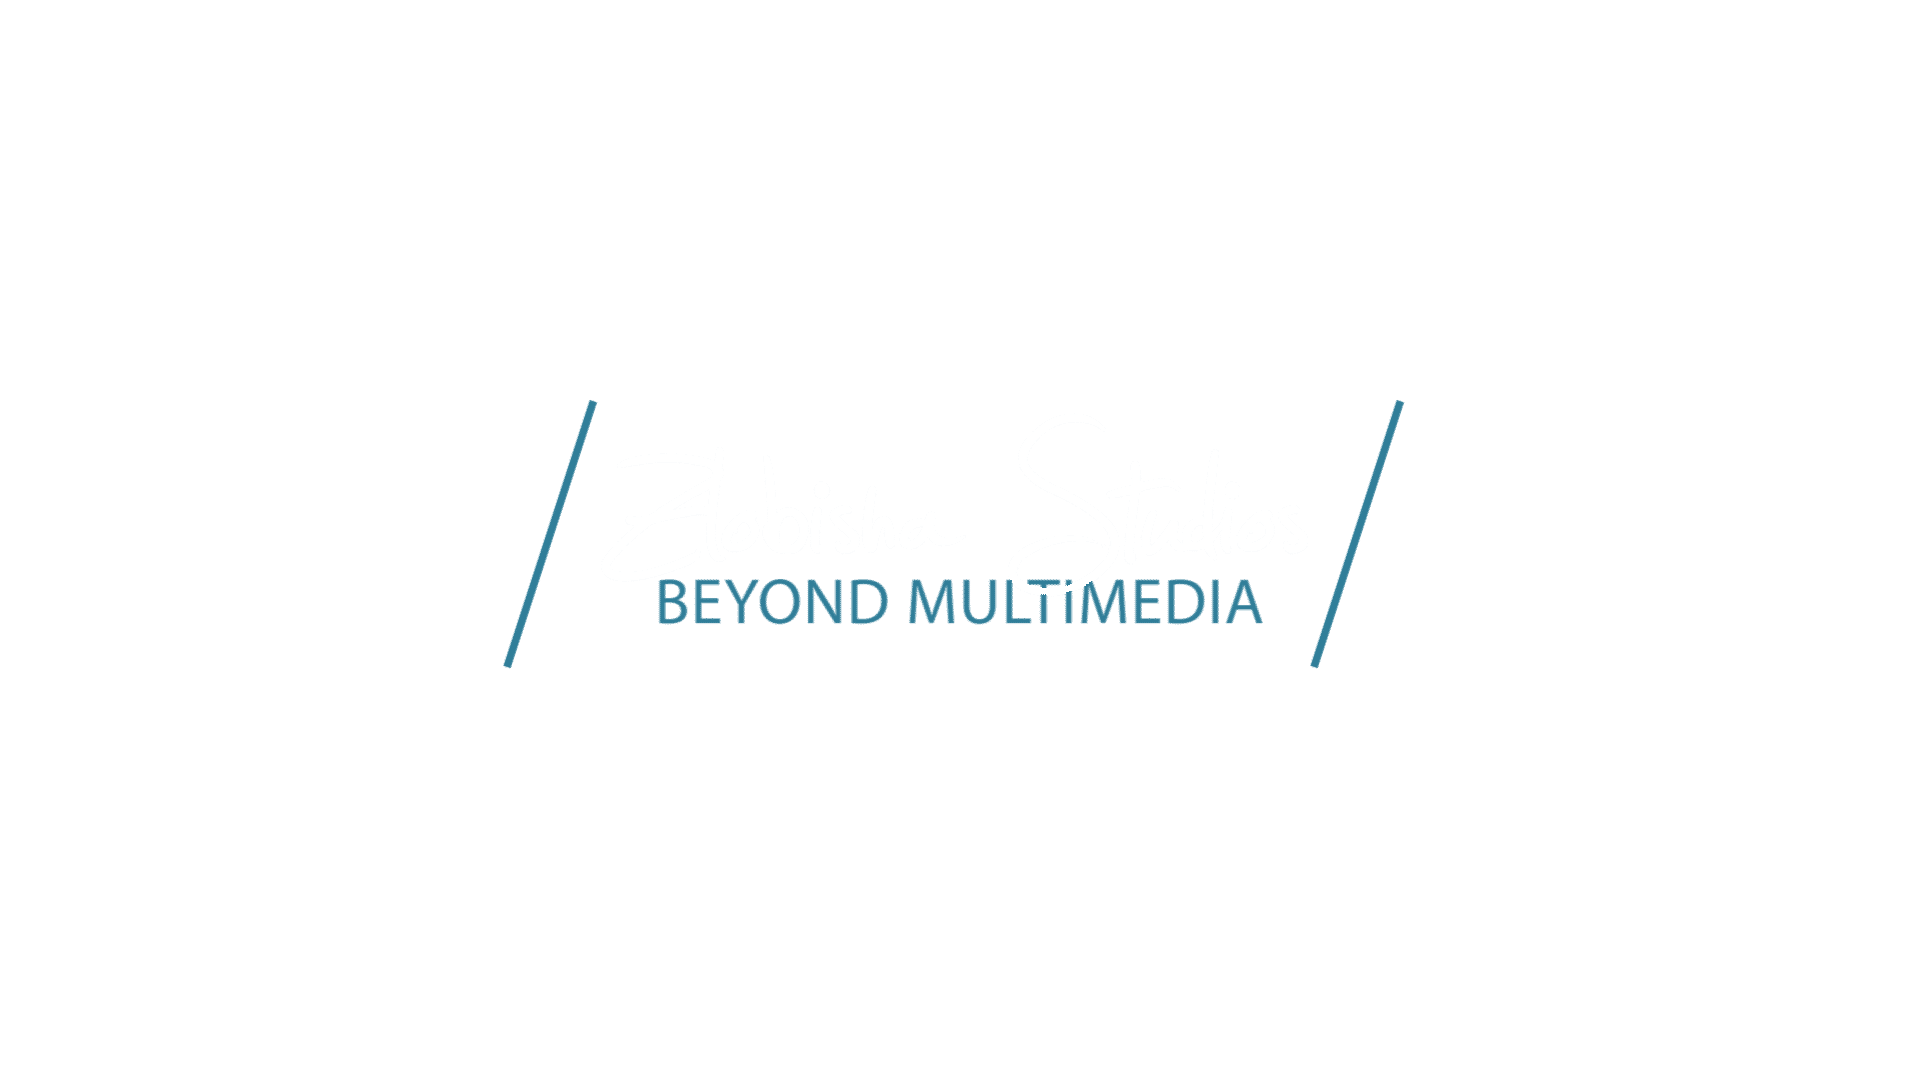 Zlobisha Studios Logo